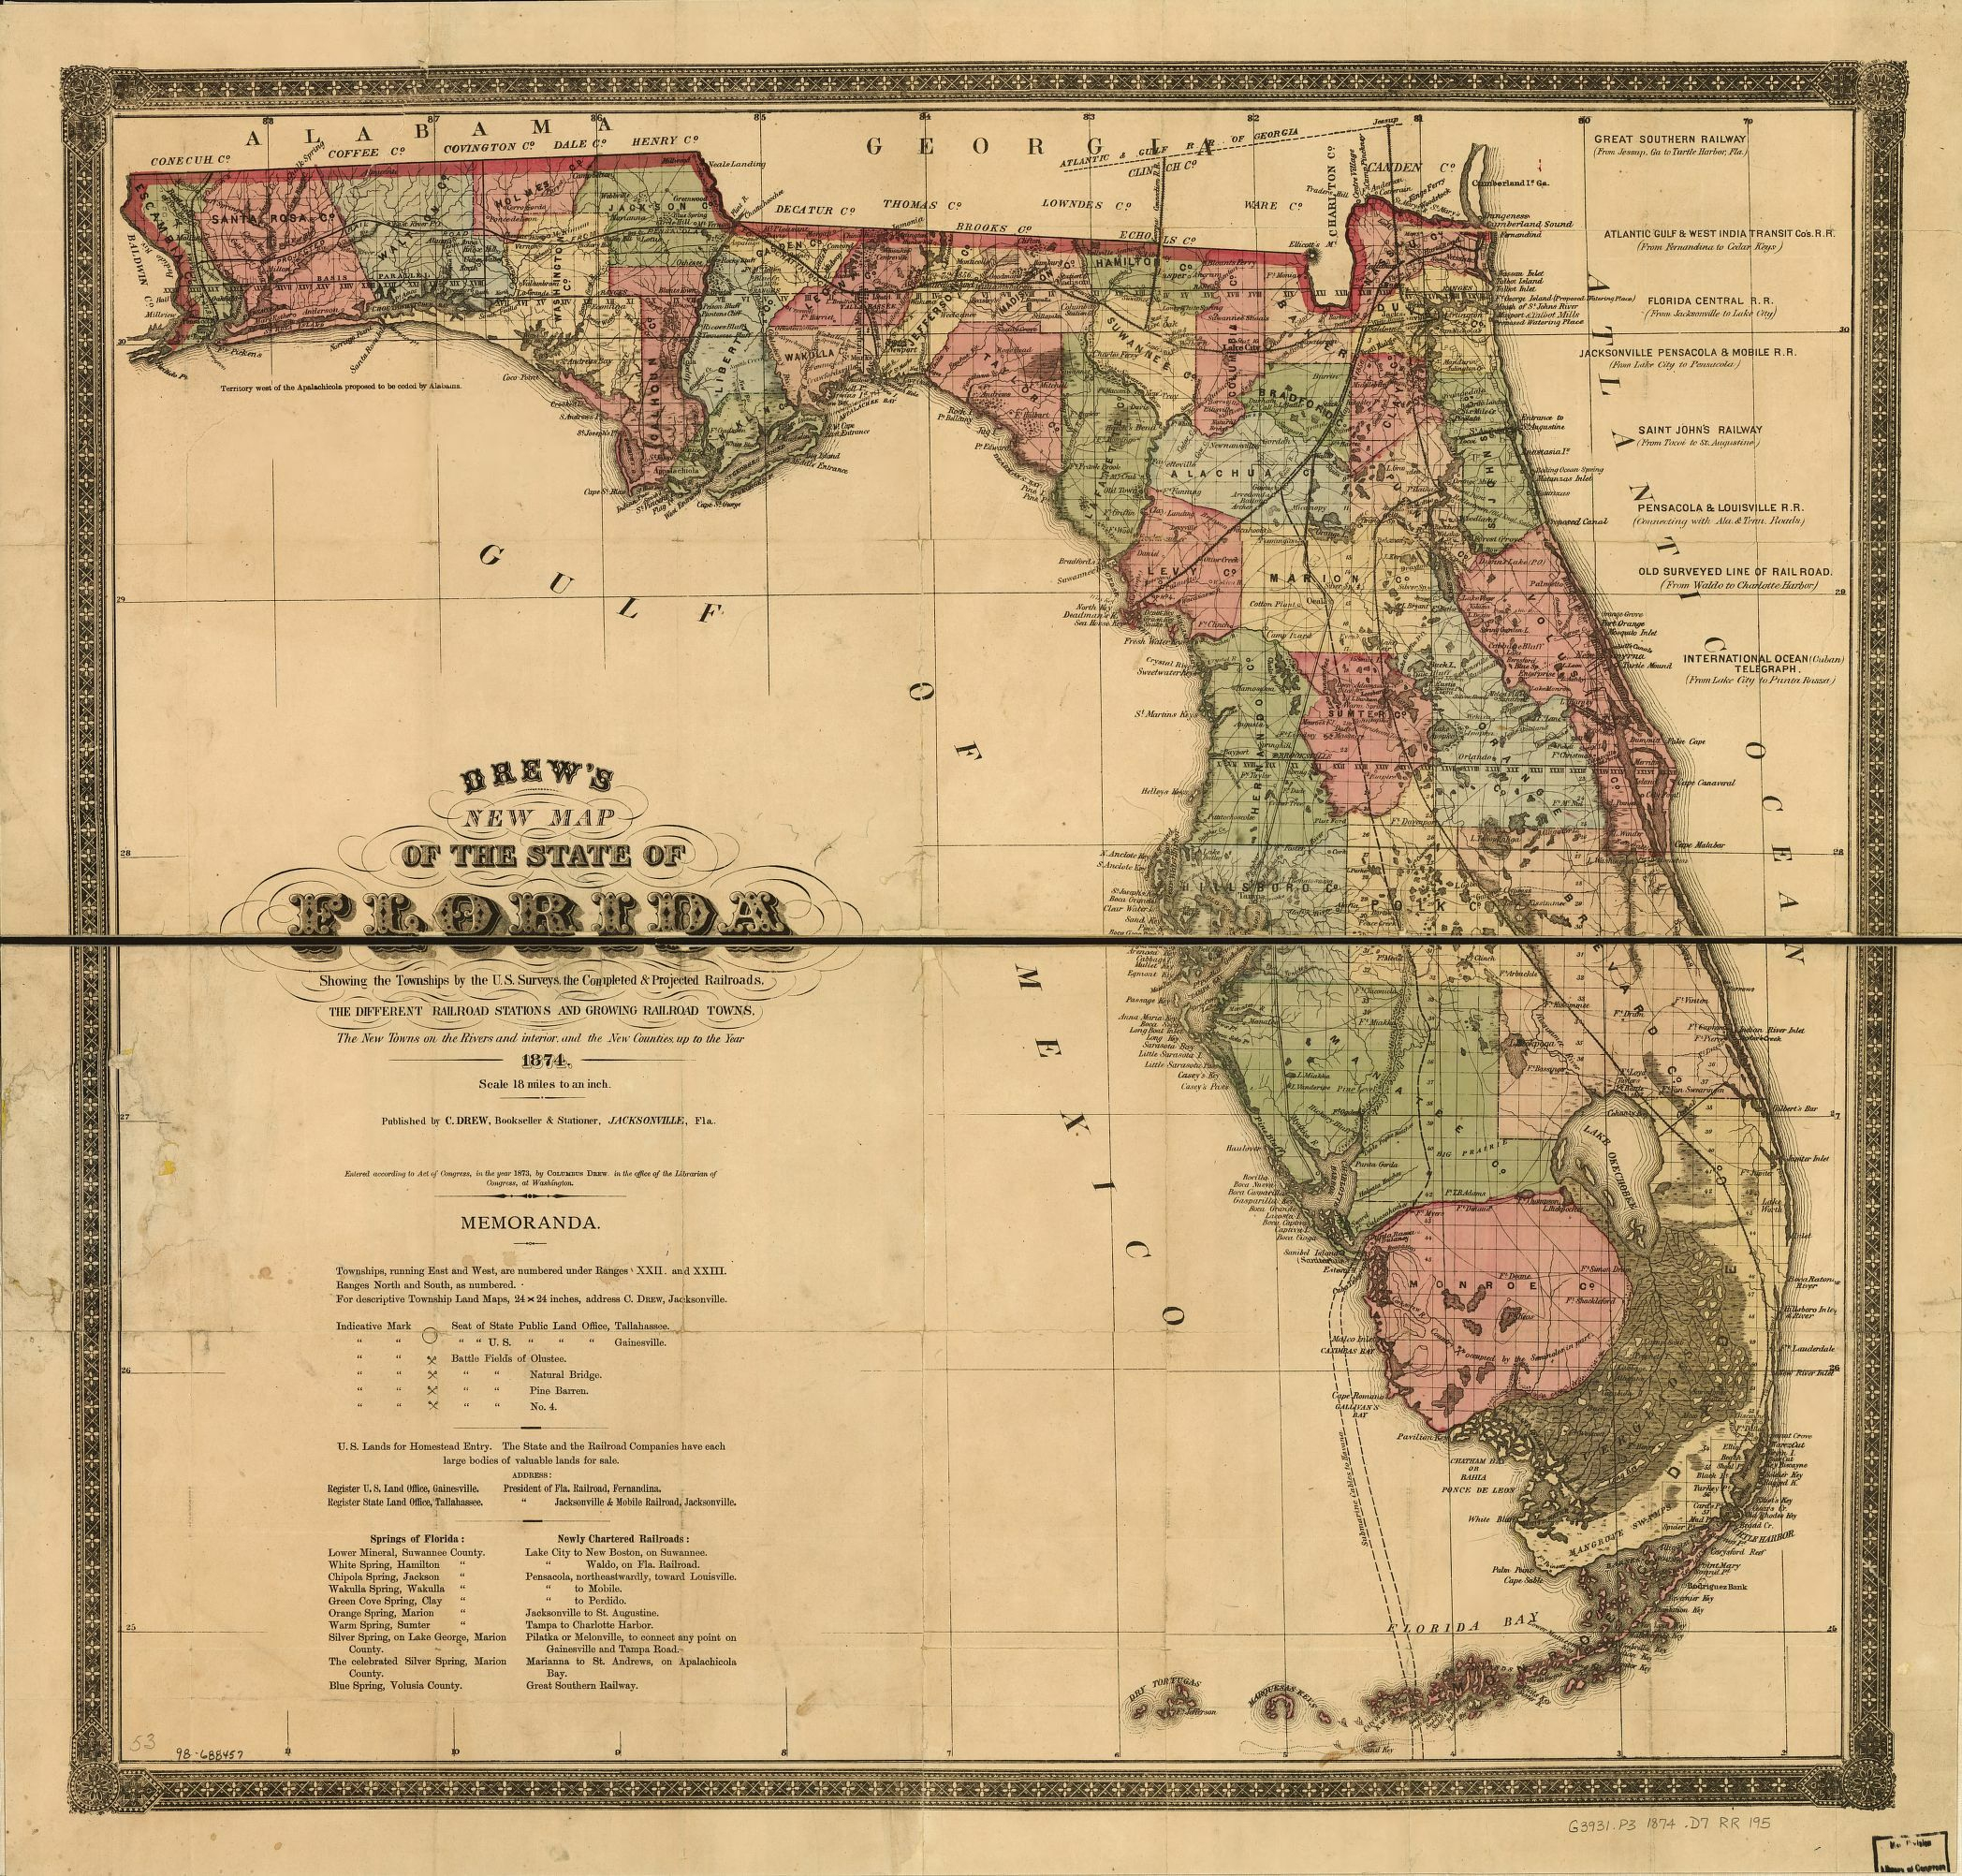 Railroad Maps, 1828 To 1900, Florida | Library Of Congress - Florida Map 1900